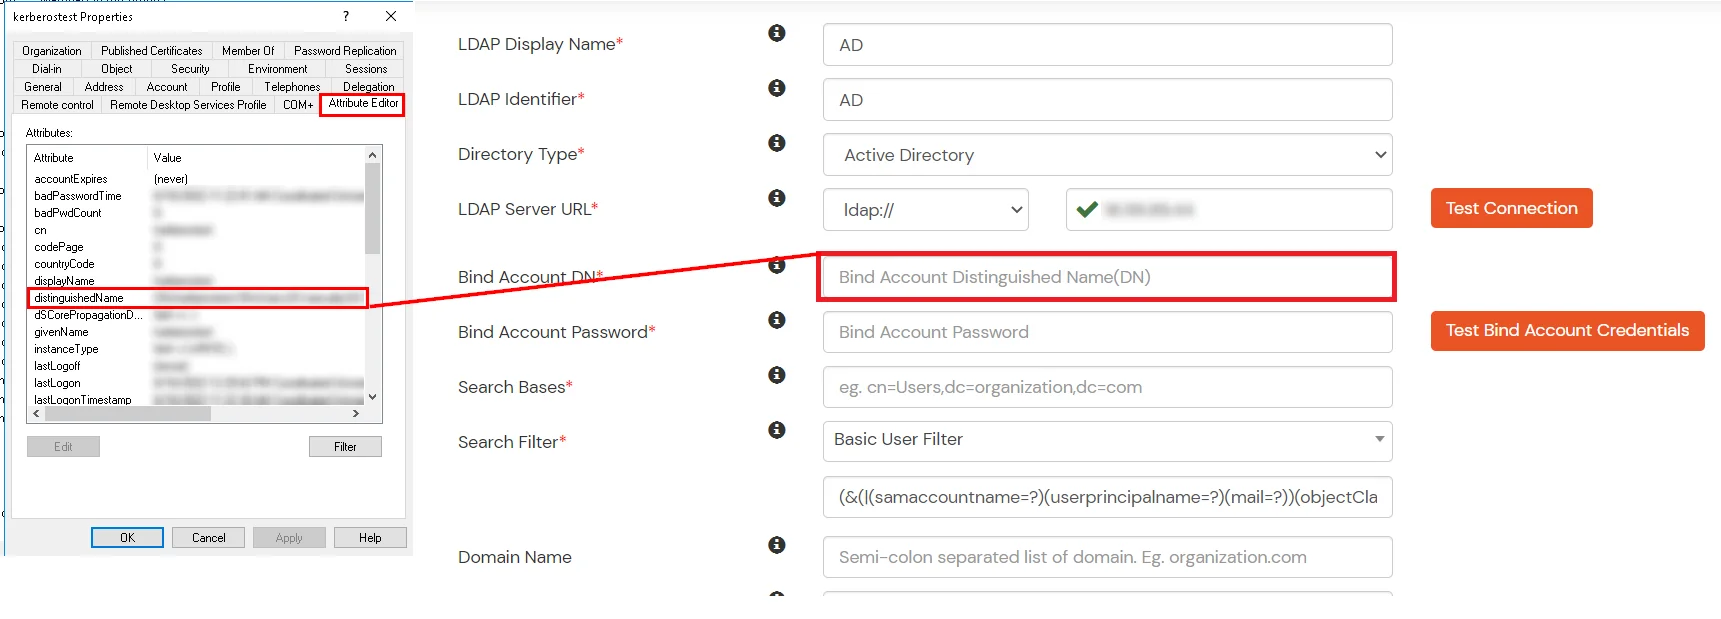 Workday MFA: Configure user bind account domain name